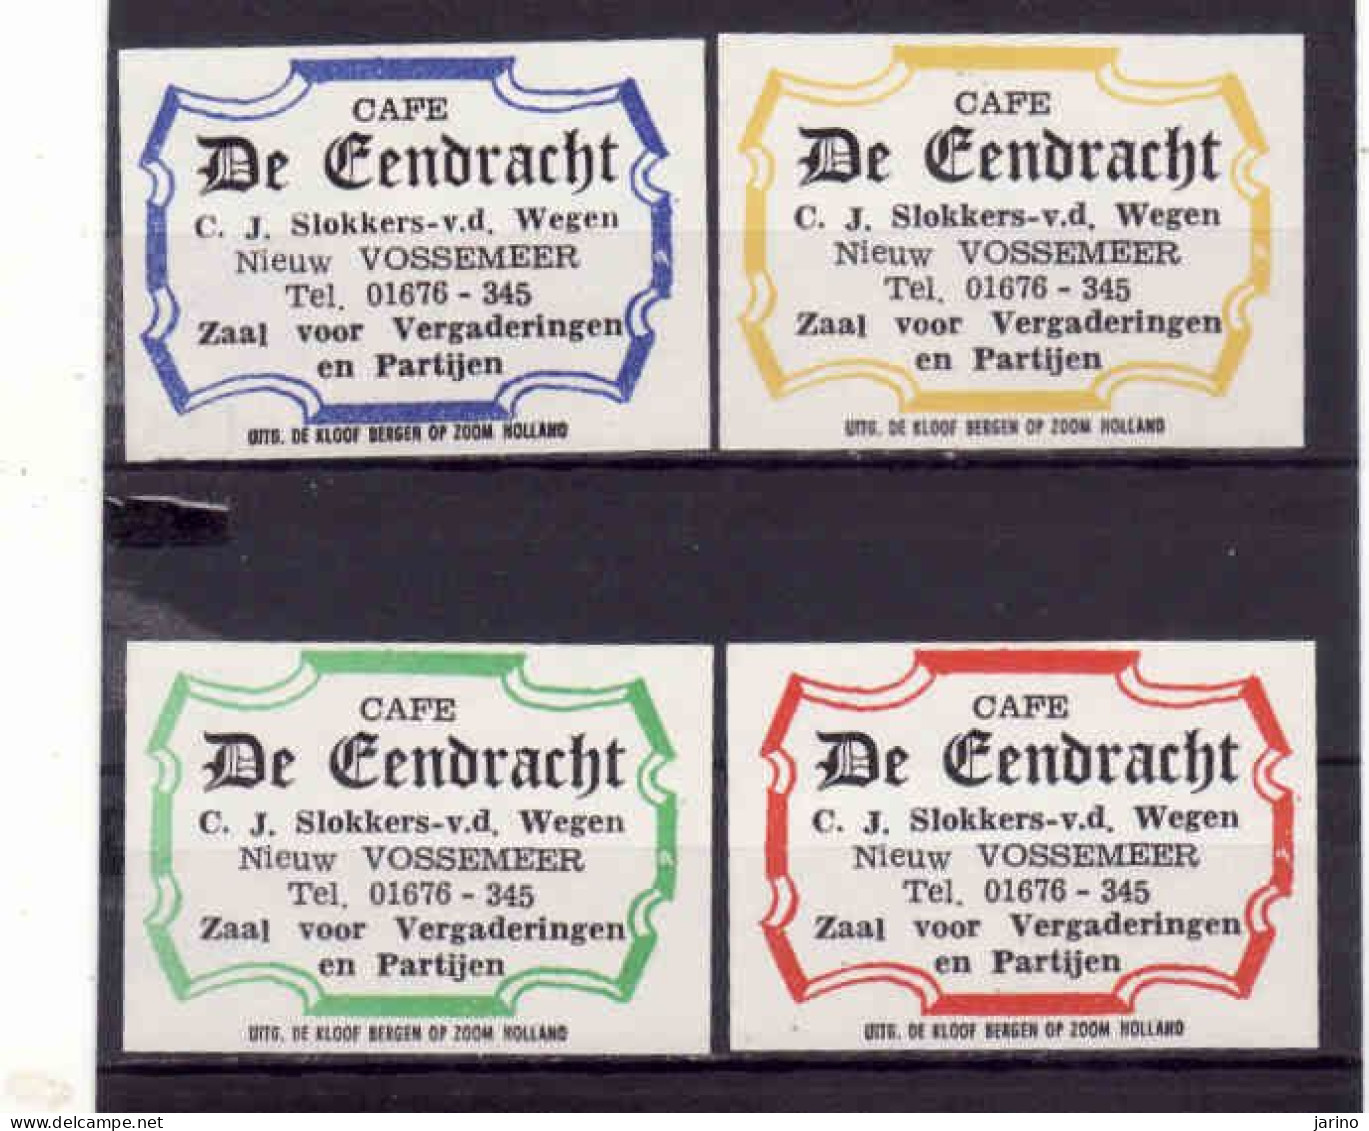 4 Dutch Matchbox Labels, Nieuw Vossemeer - North Brabant, Cafe De Fendracht,C.J.Slokkers-v.d.Wegen, Holland, Netherlands - Matchbox Labels